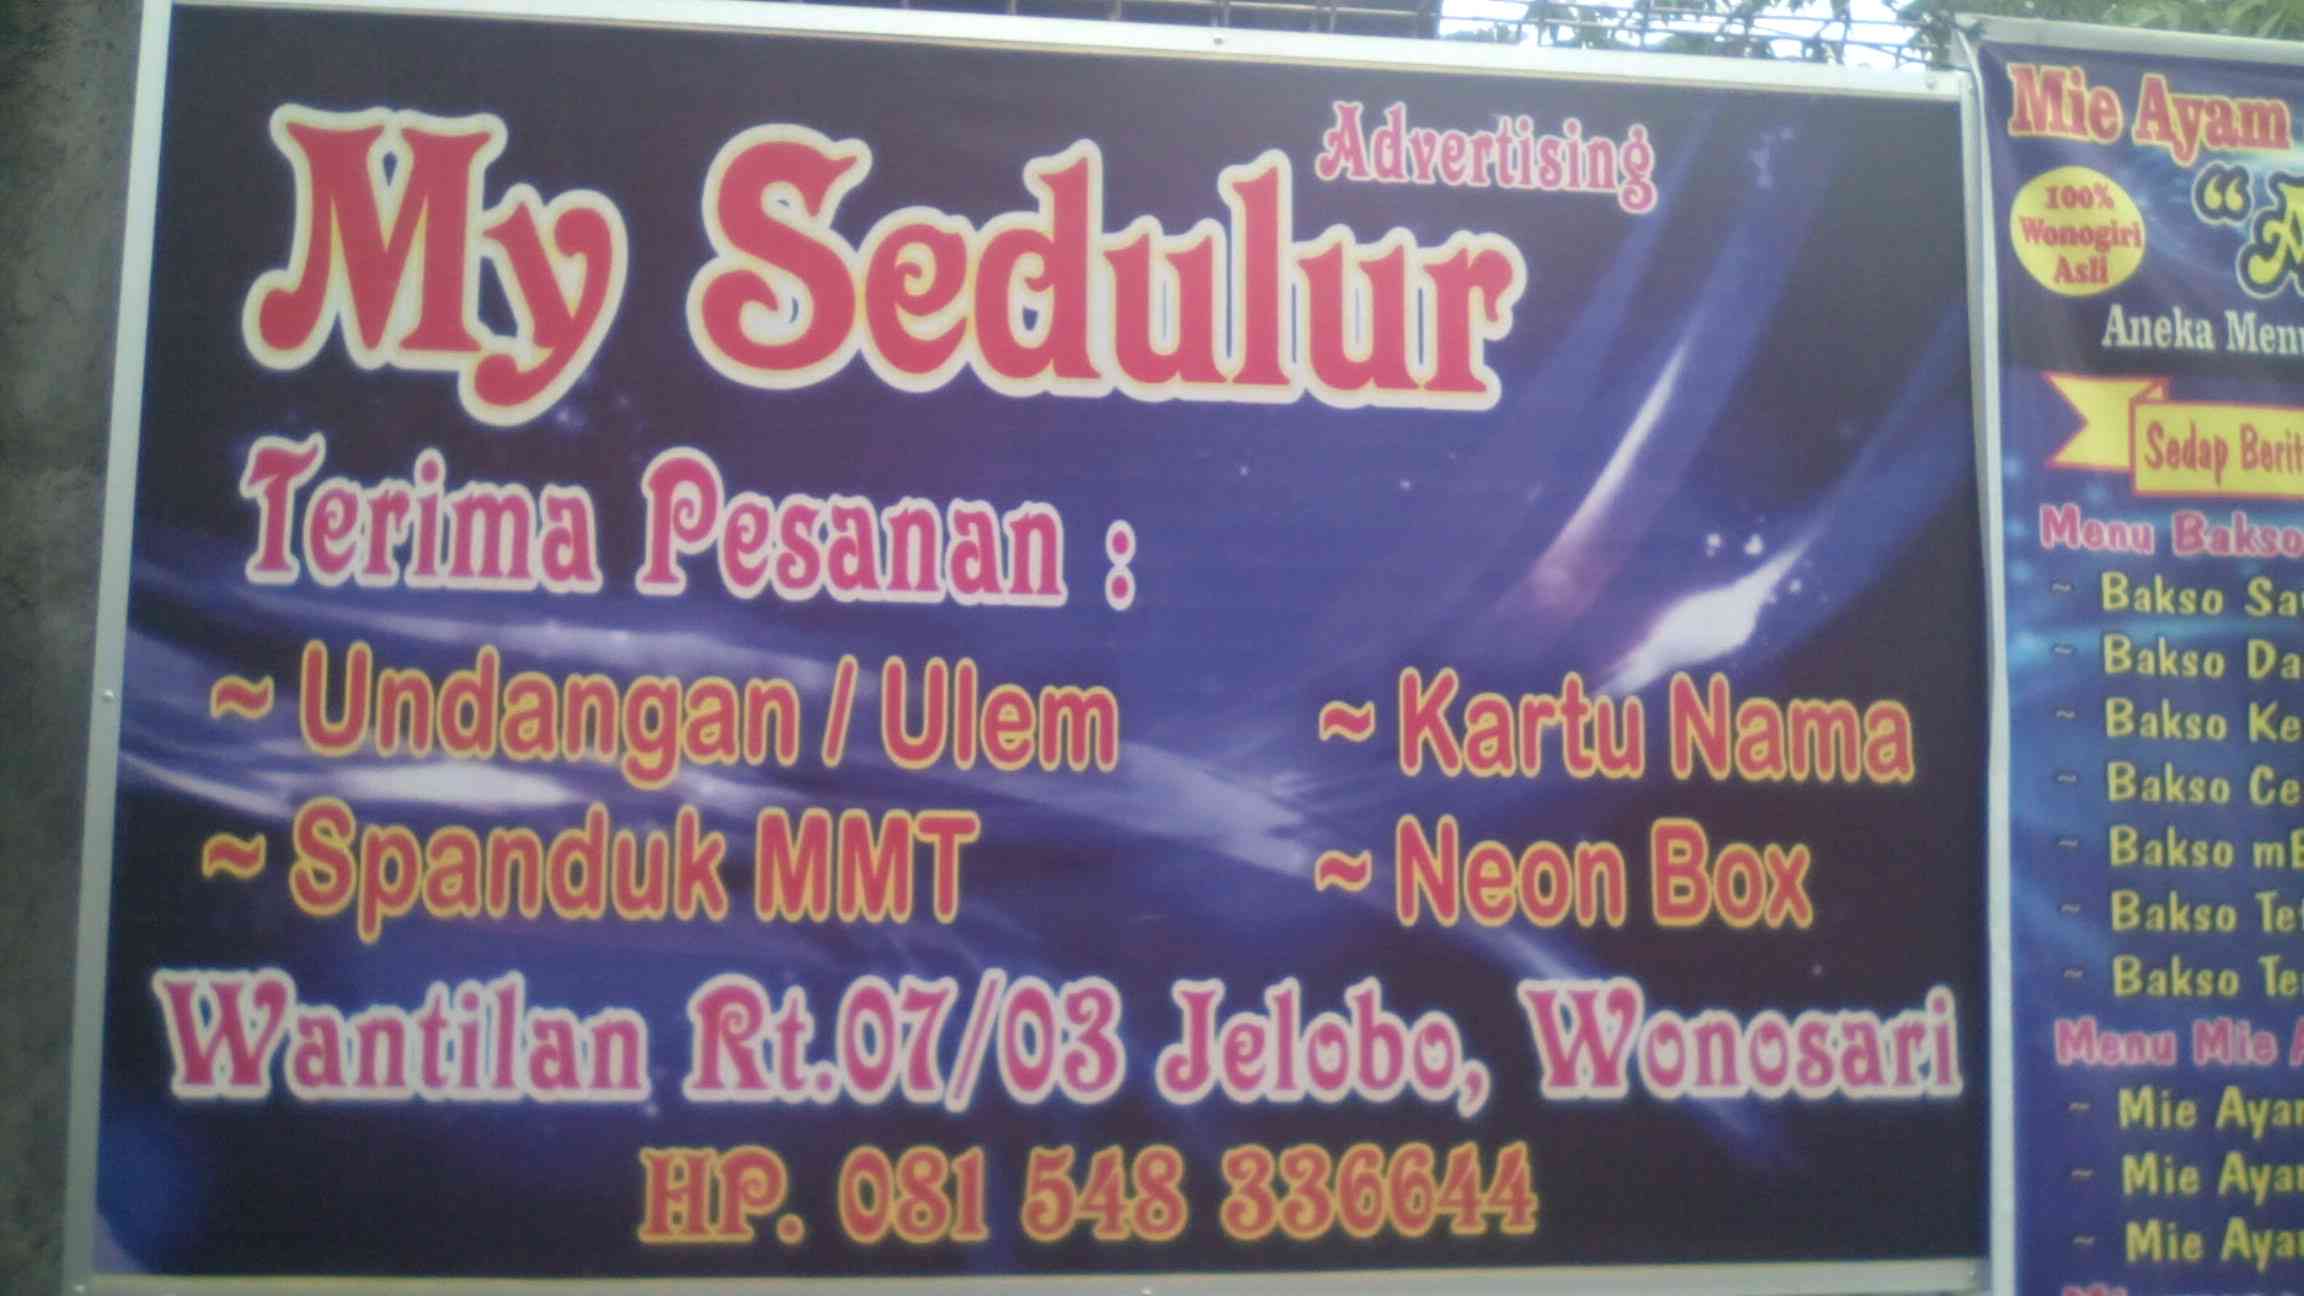 My Sedulur Advertising